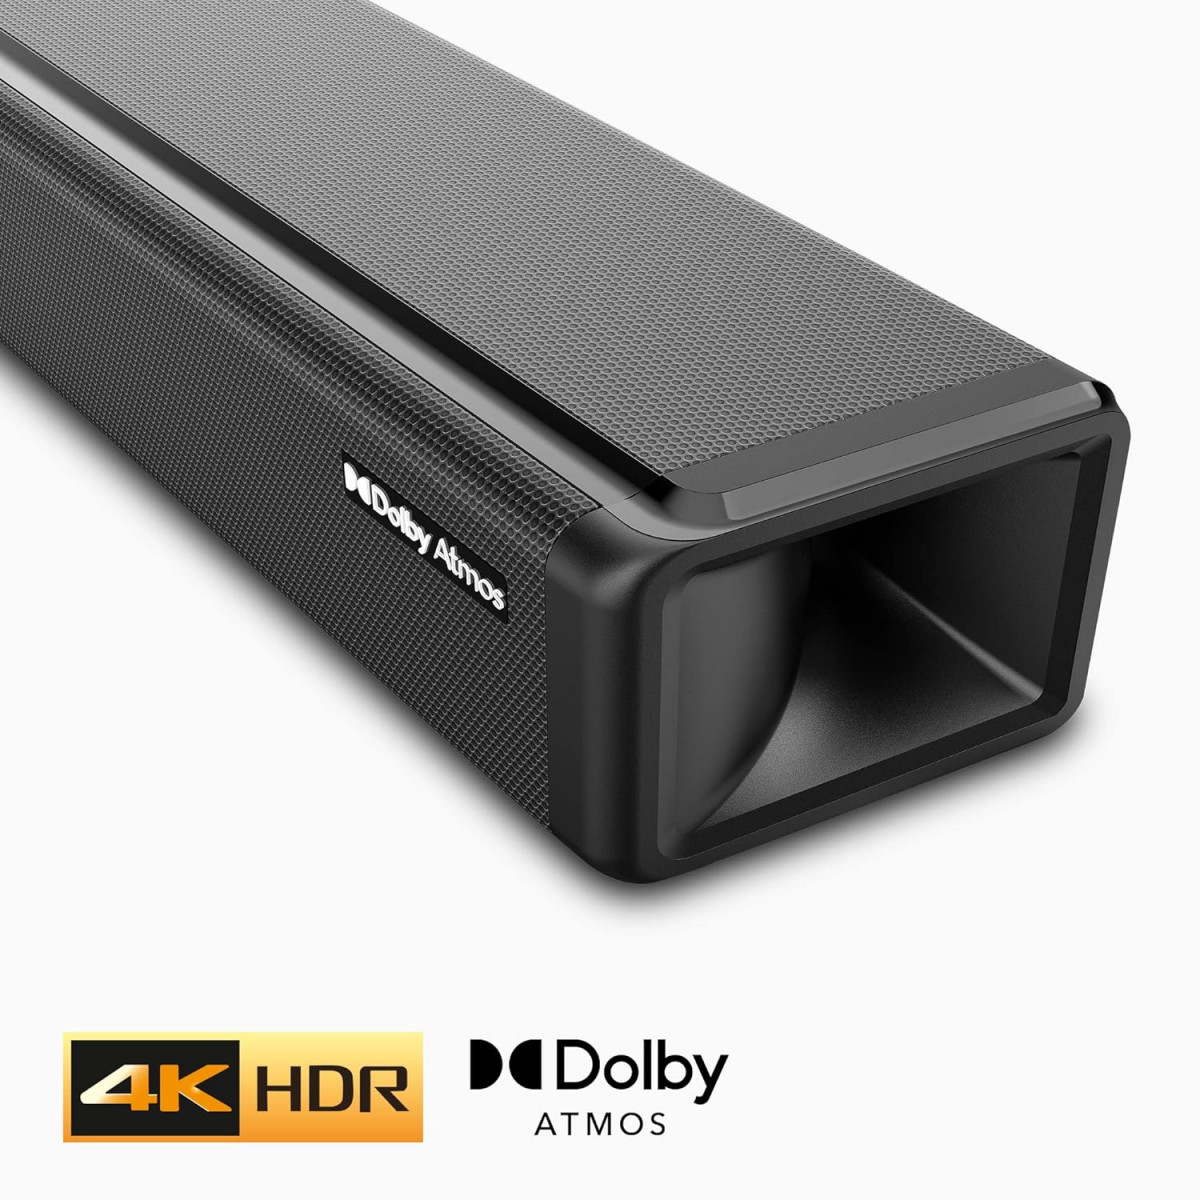 ZEBRONICS Juke BAR 3850 Pro 170W BT HDMI AUX USB Optical Soundbar with Dolby Atmos - Black